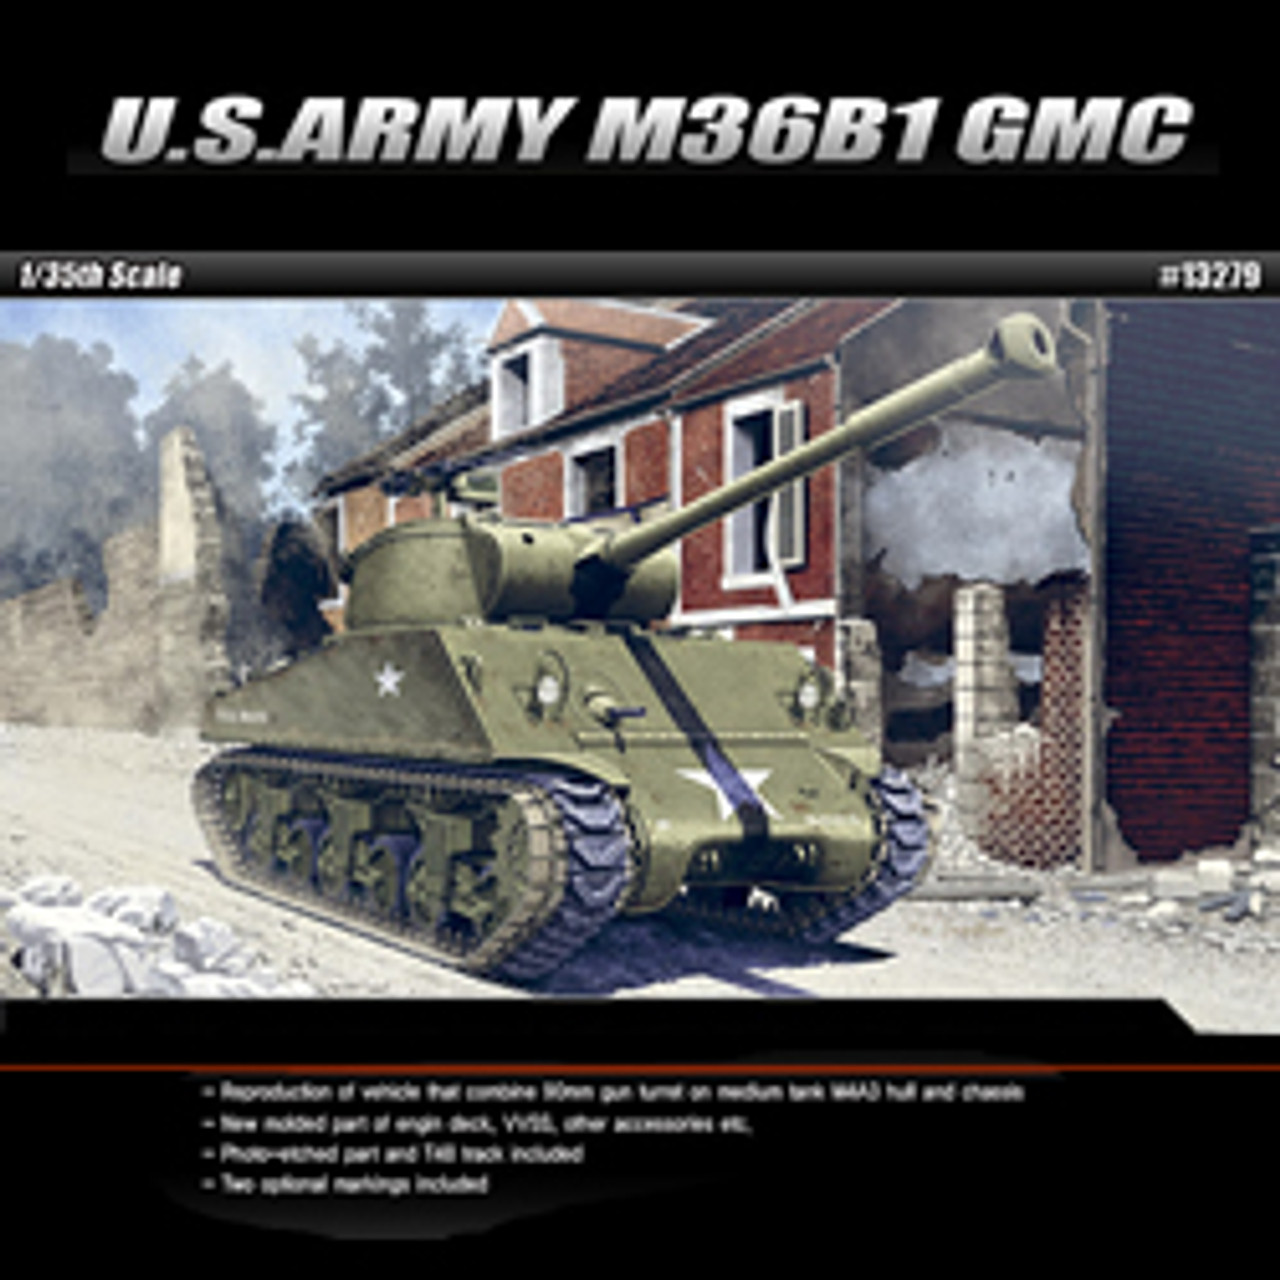 Academy 13279 1/35 M36B1 GMC US Army Plastic Model Kit